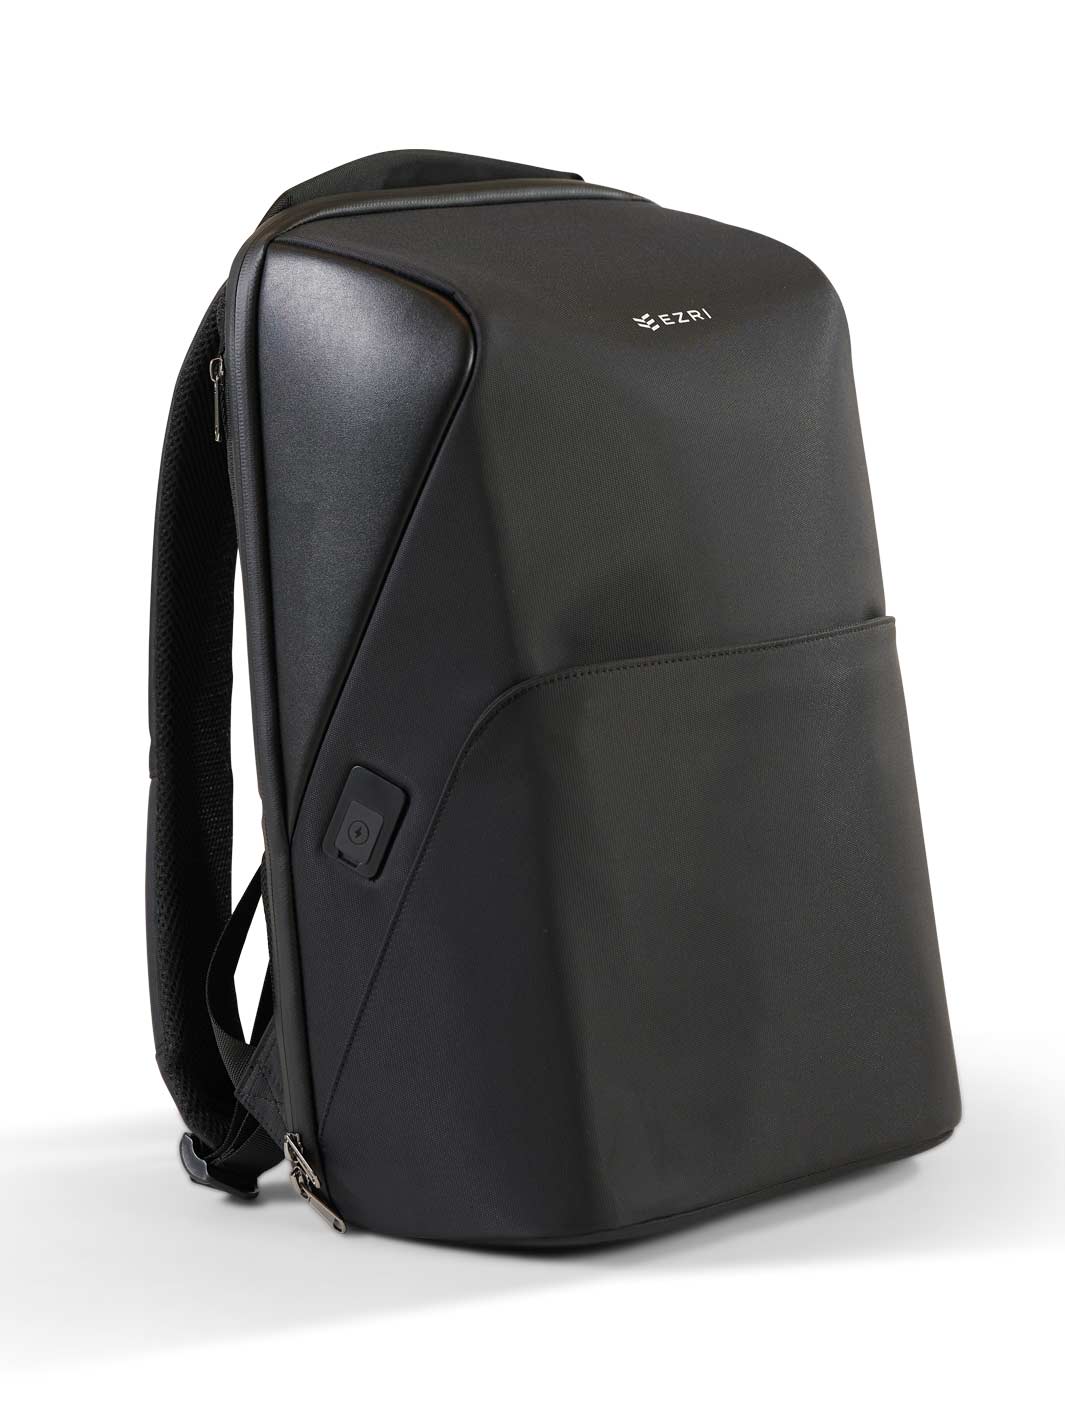 Ezri Executive Backpack - Laptop backpack | EZRI